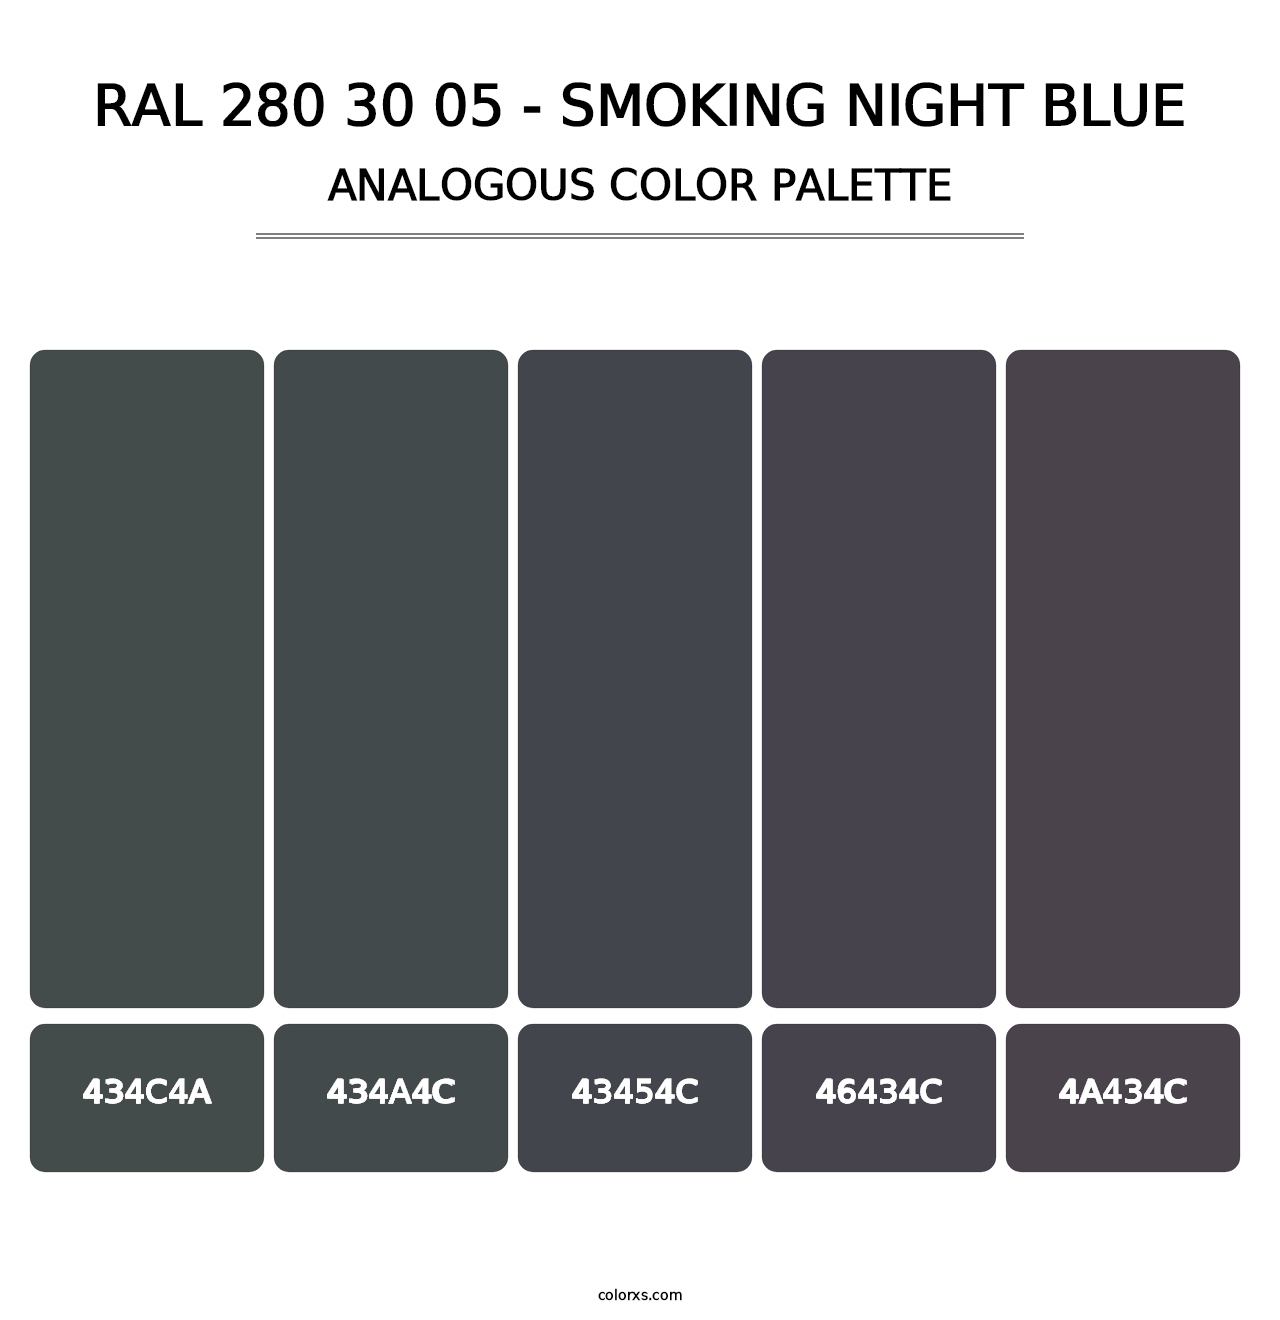 RAL 280 30 05 - Smoking Night Blue - Analogous Color Palette